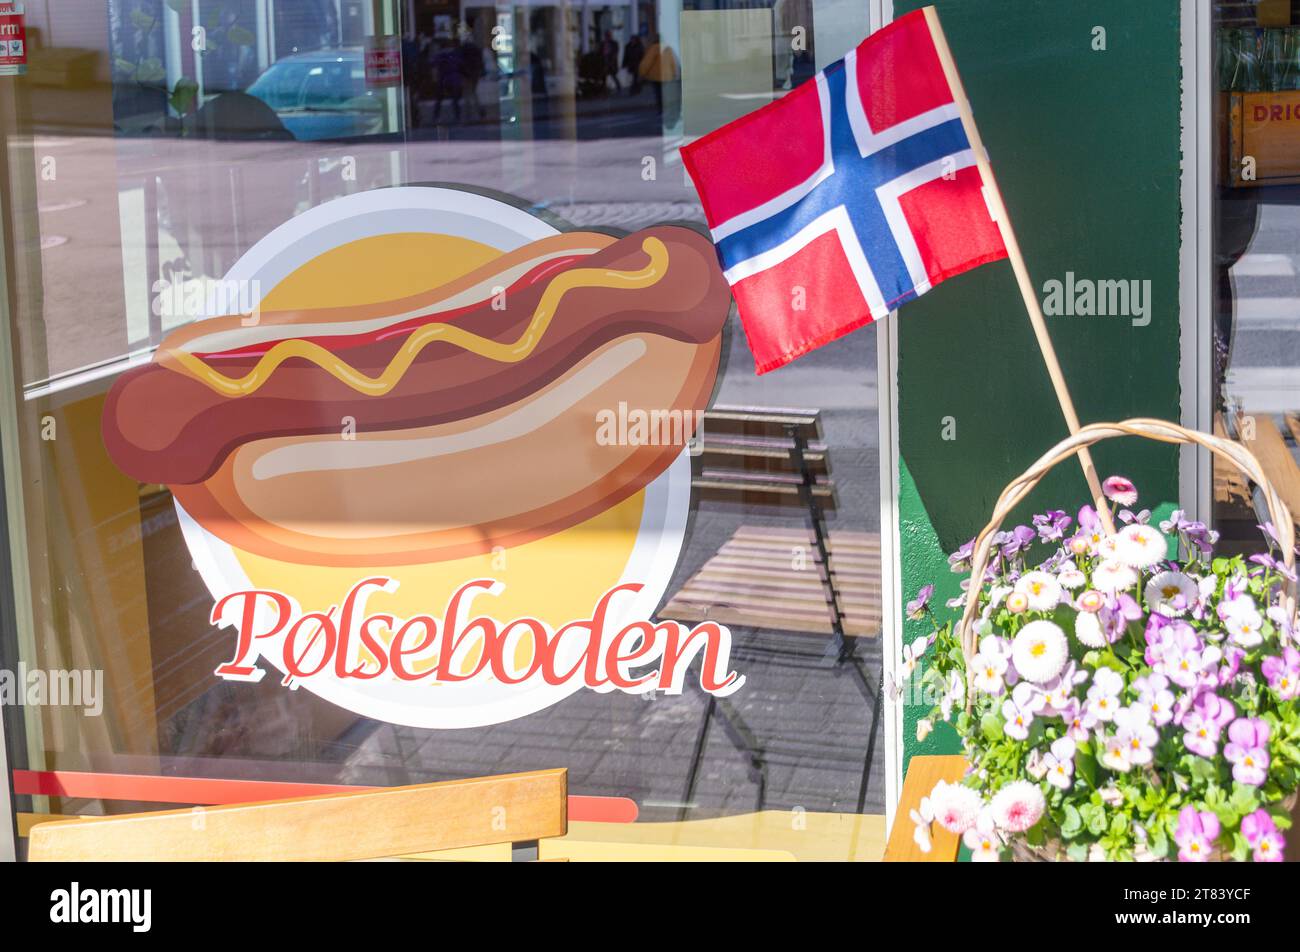 Pølseboden hot dog restaurant, Strandgata, Town Centre Haugesund, Rogaland County, Norway Stock Photo